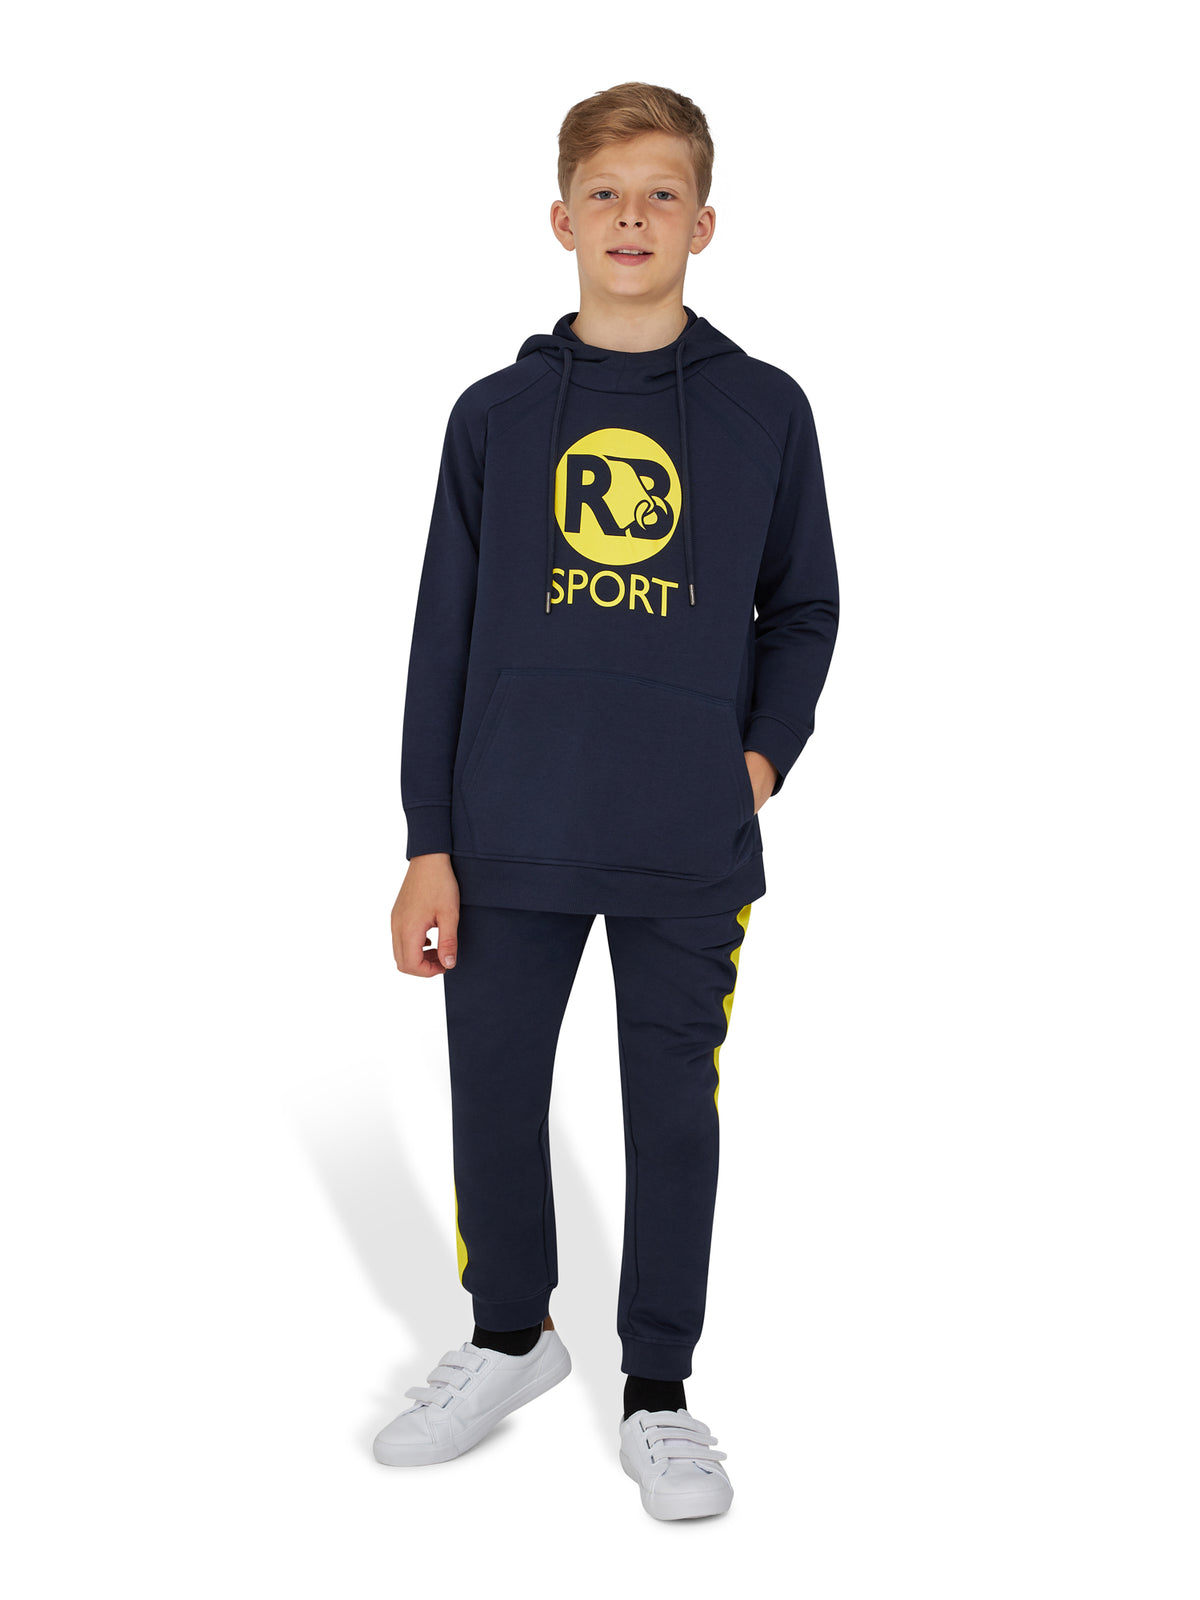 RB Sport Jogger - Navy